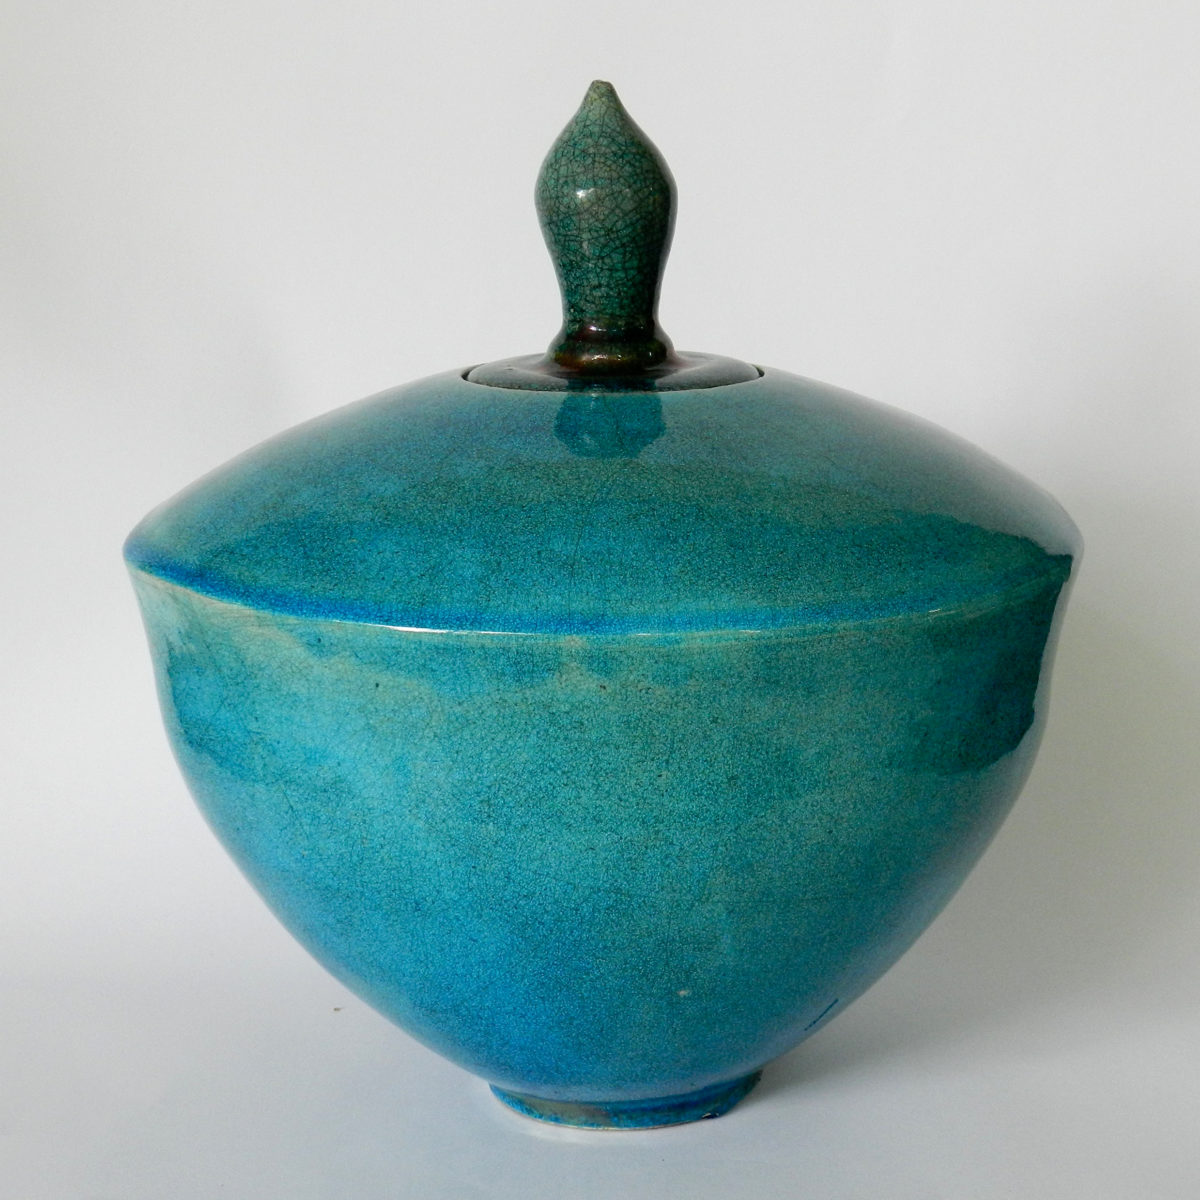 Turquoise glazed raku vessel | Dennis Forshaw | $850